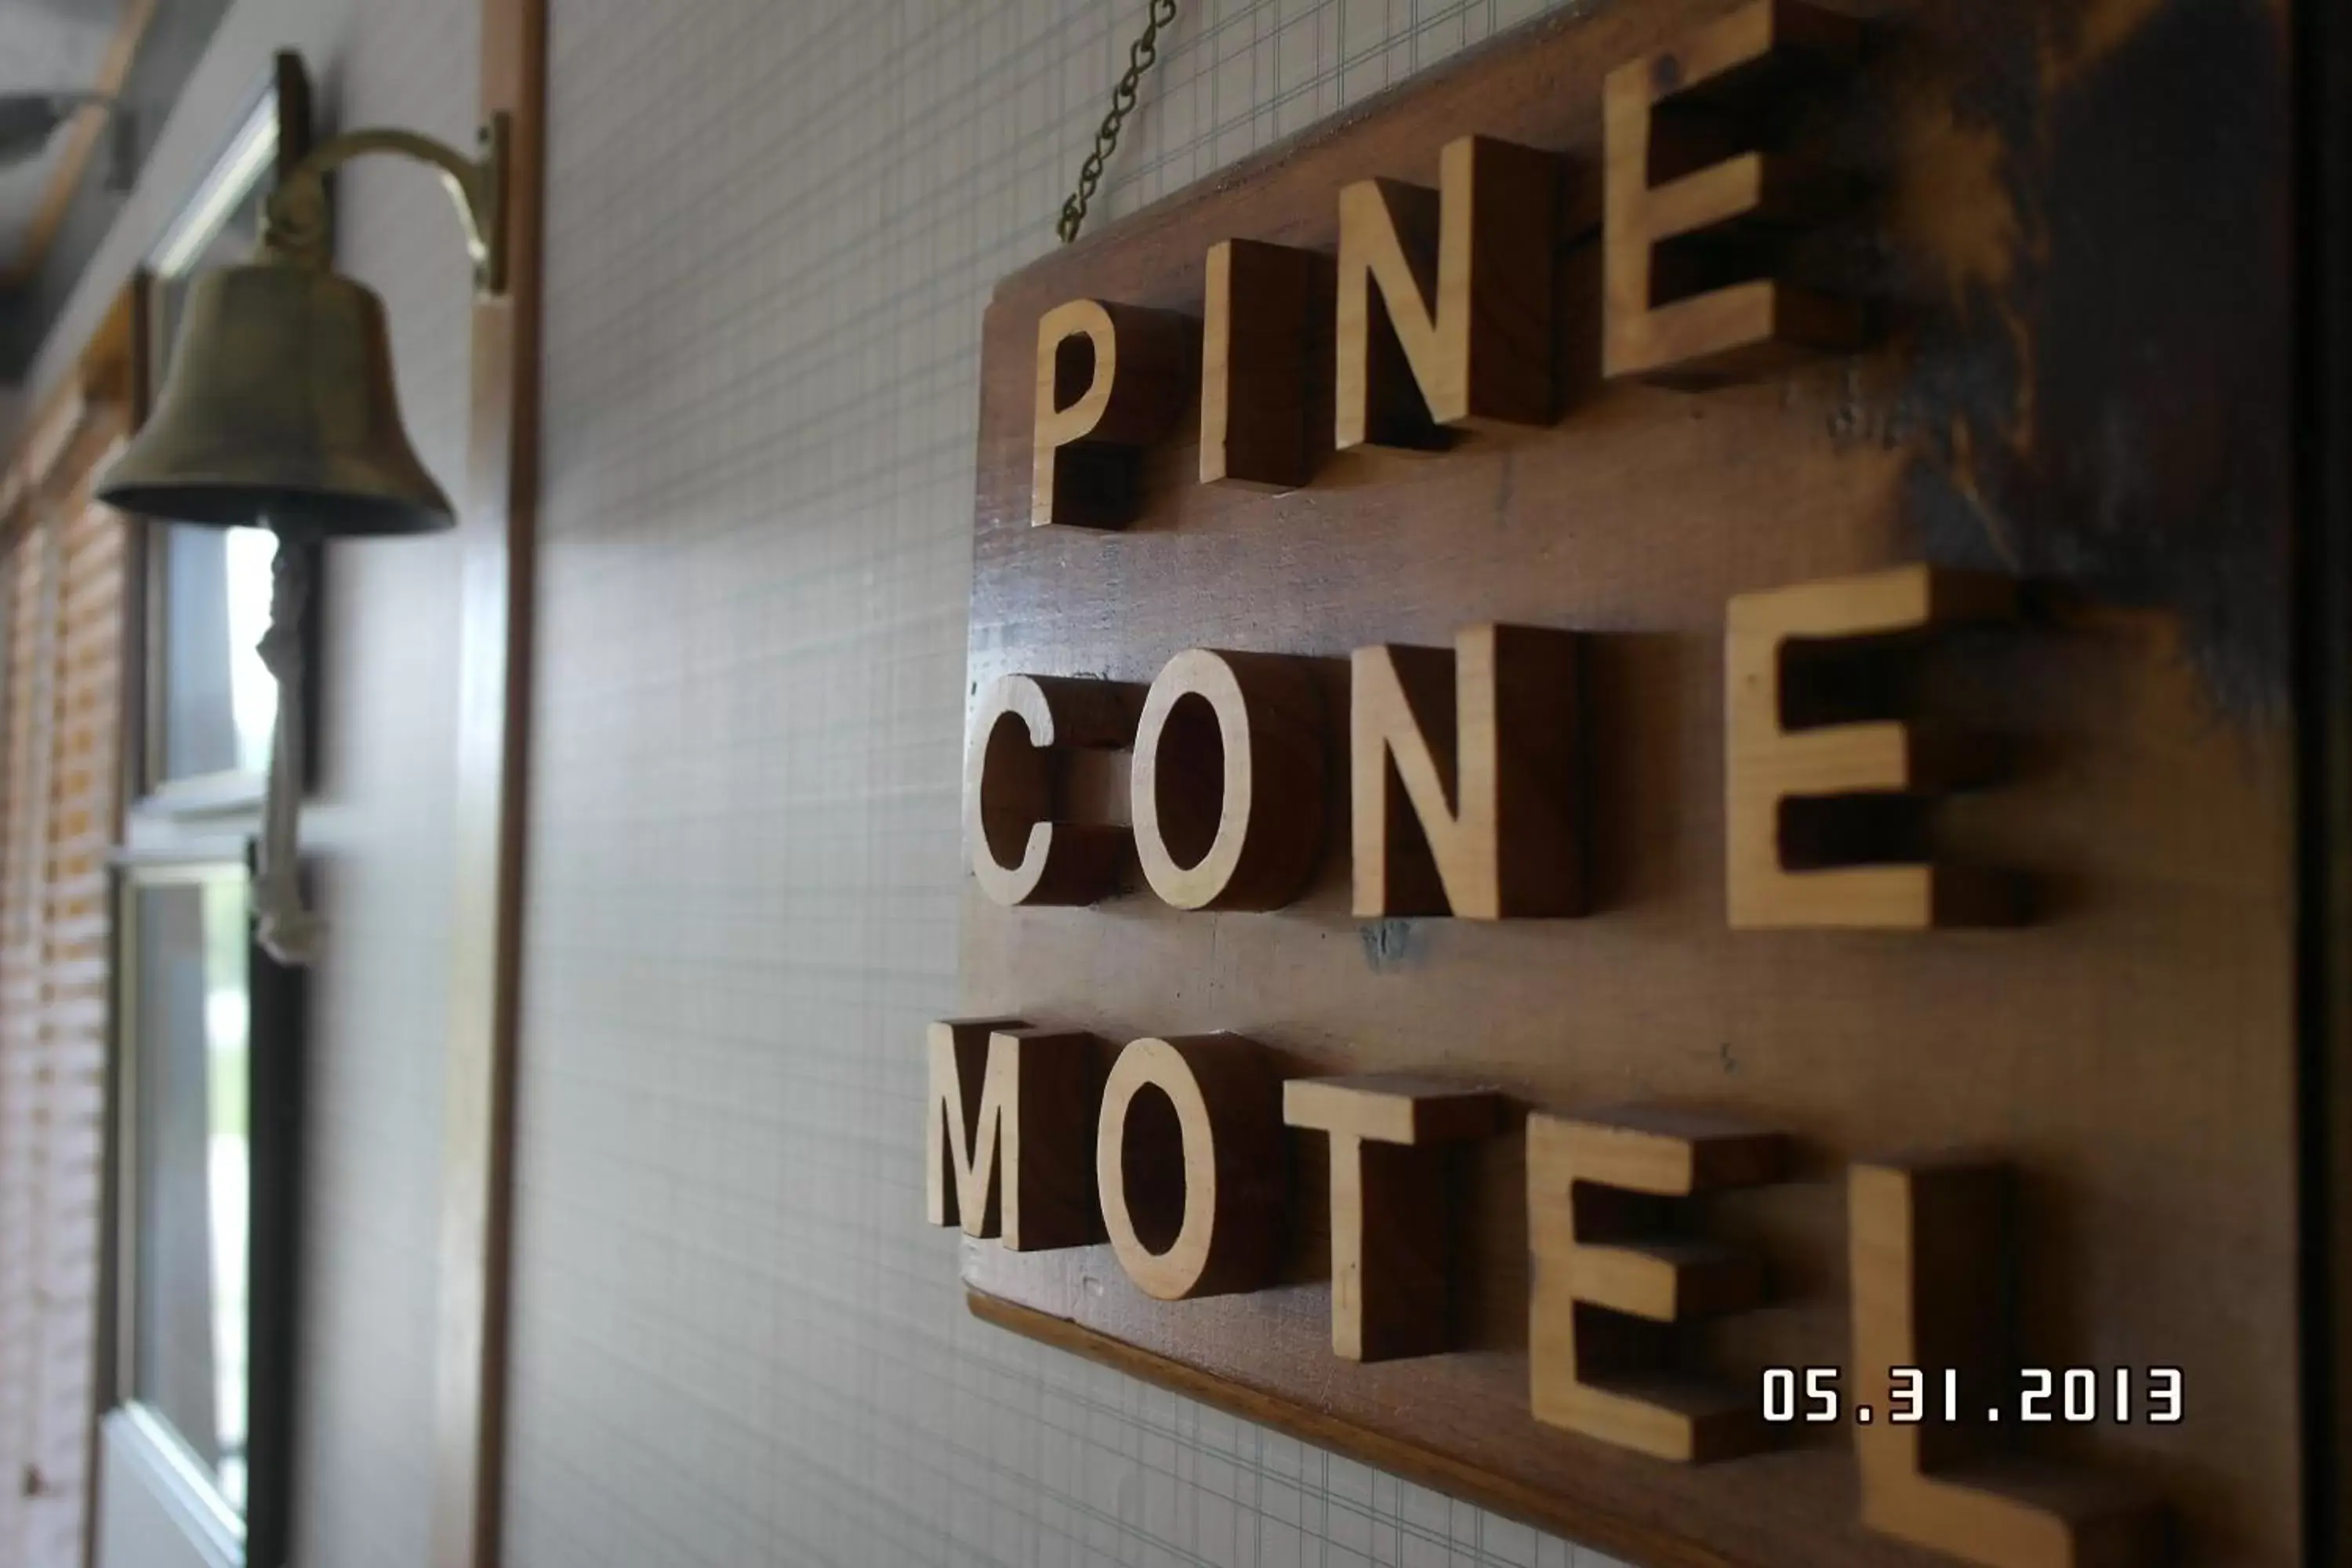 Pinecone Motel